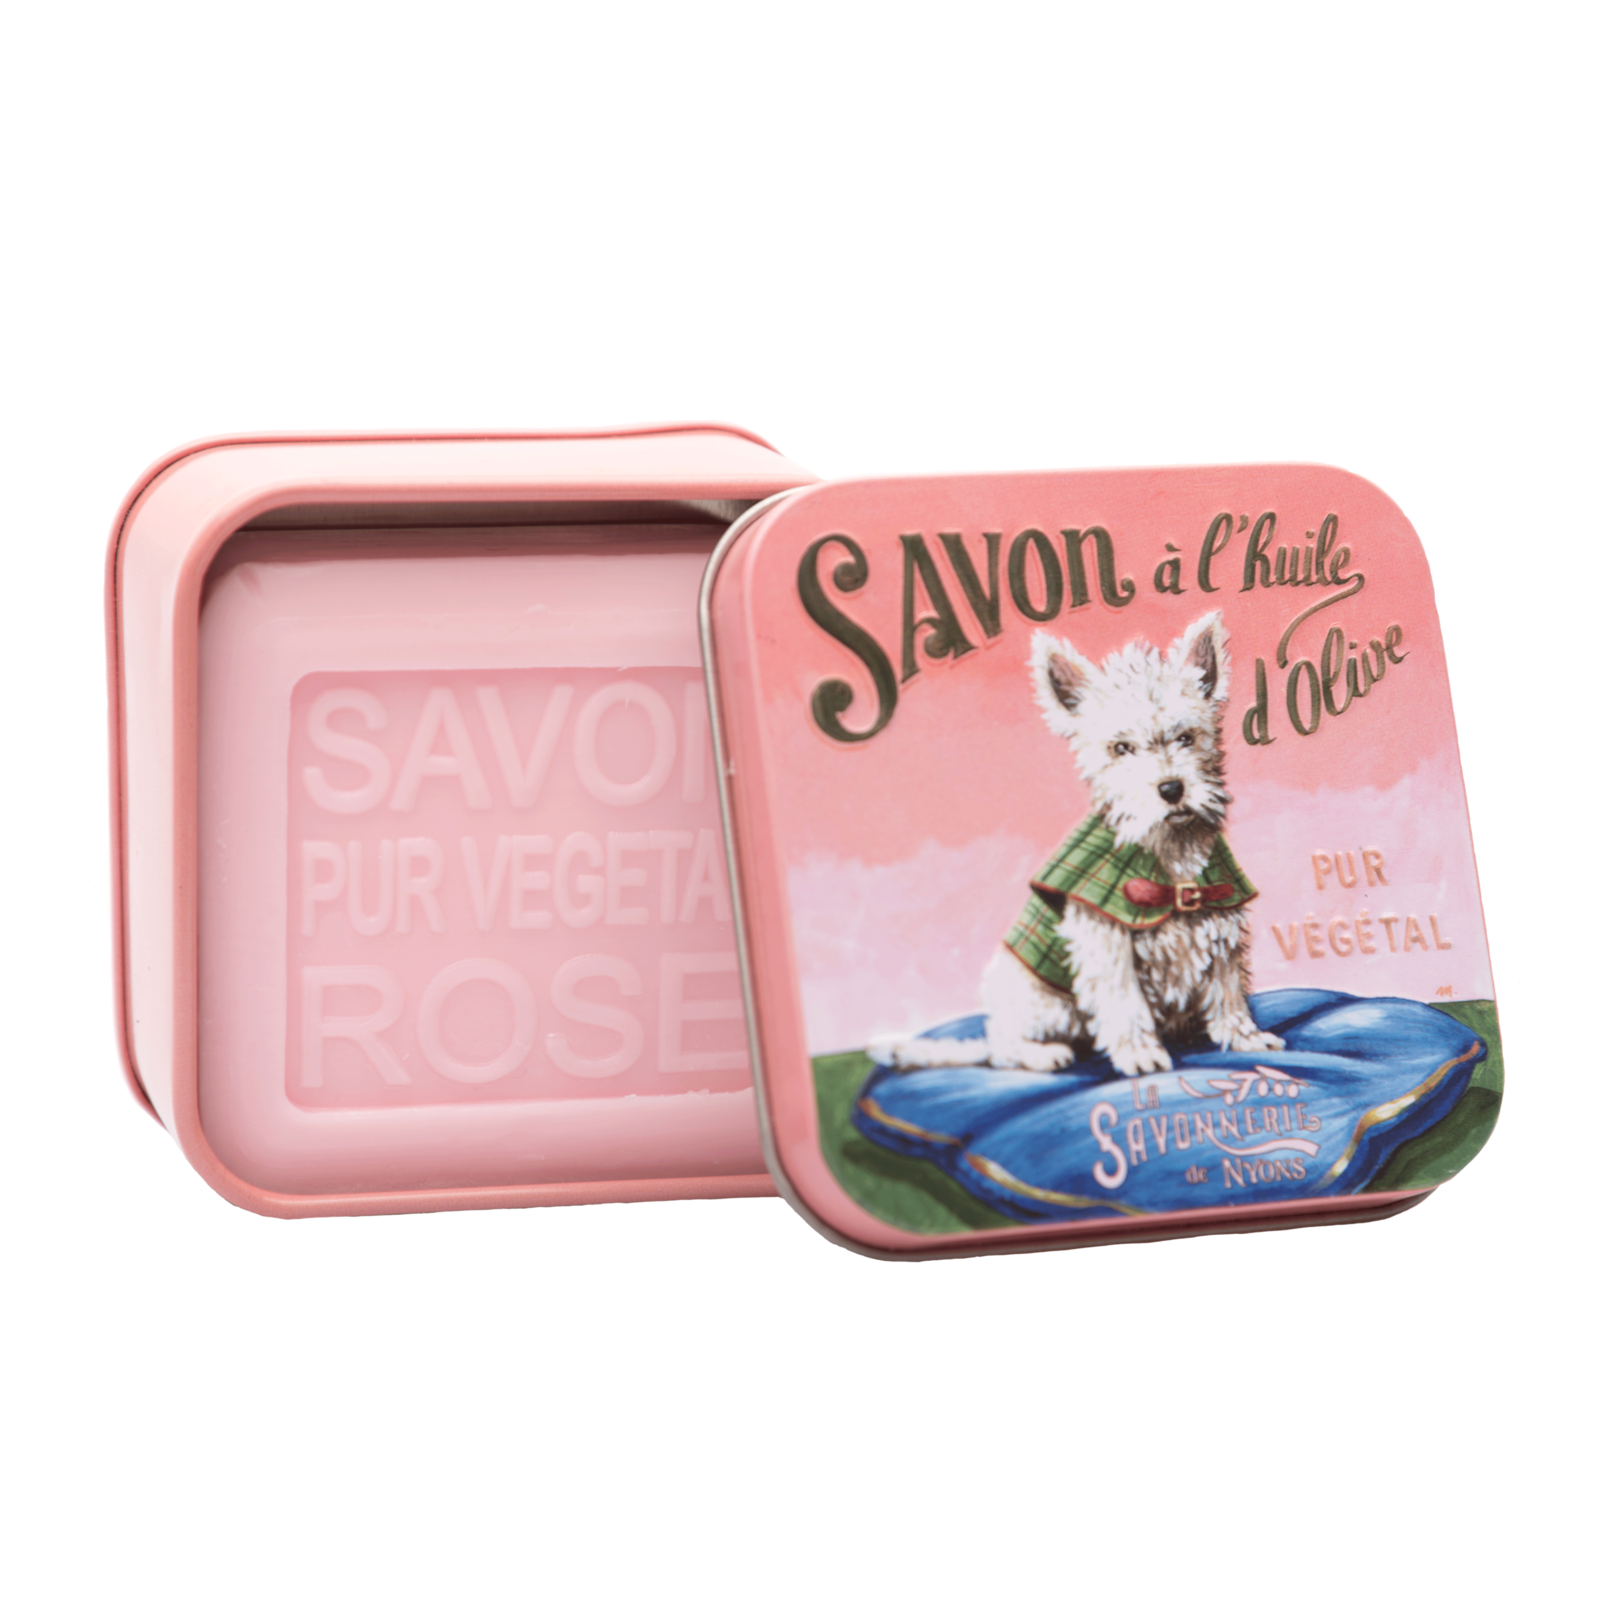 La Savonnerie de Nyons 100g Soap in Tin Box - Dogs (Set of 2)